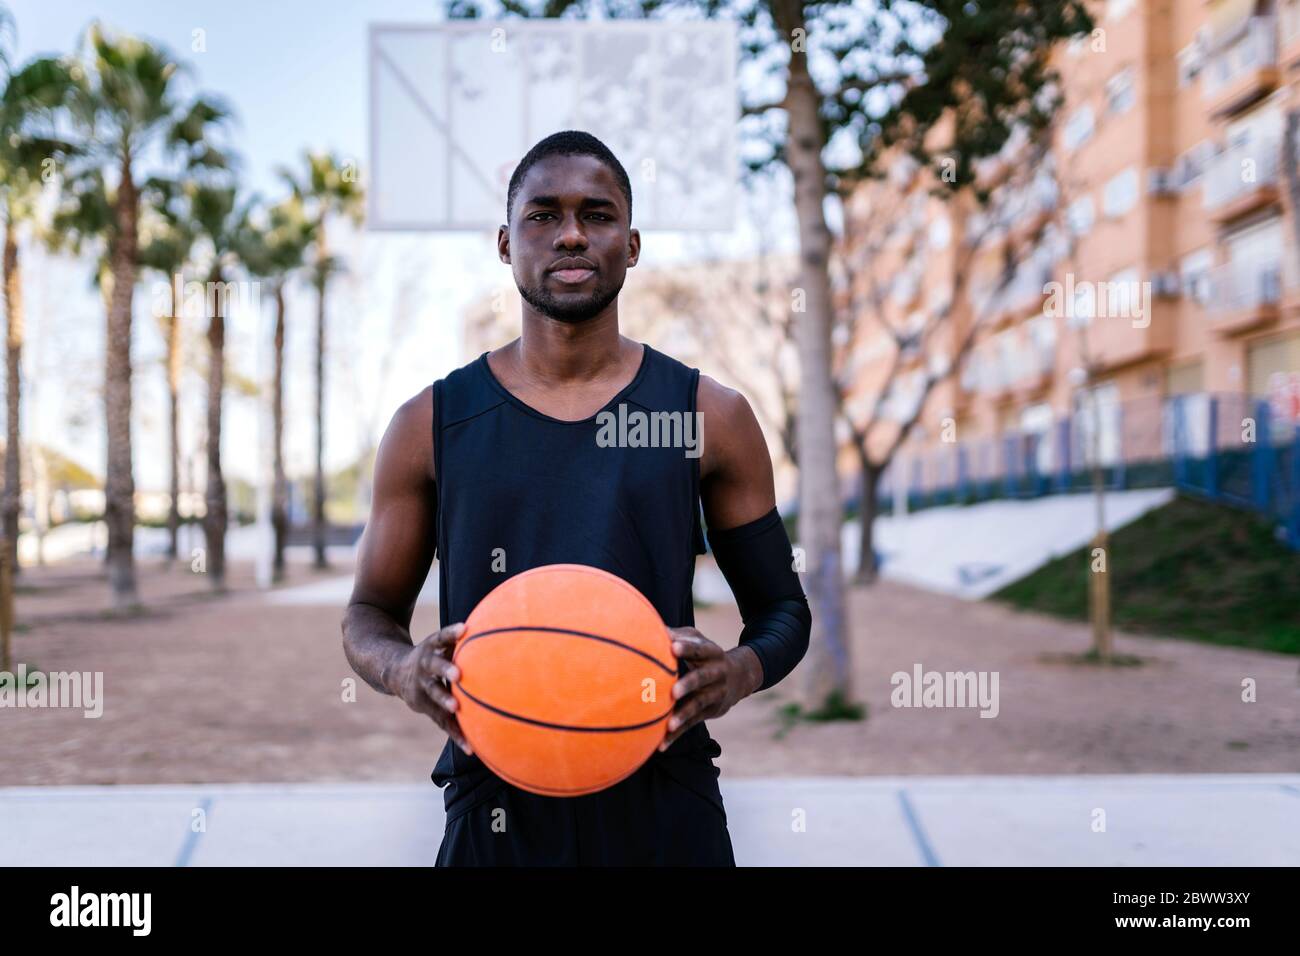 Junger Mann hält Basketball auf dem Basketballplatz Stockfoto